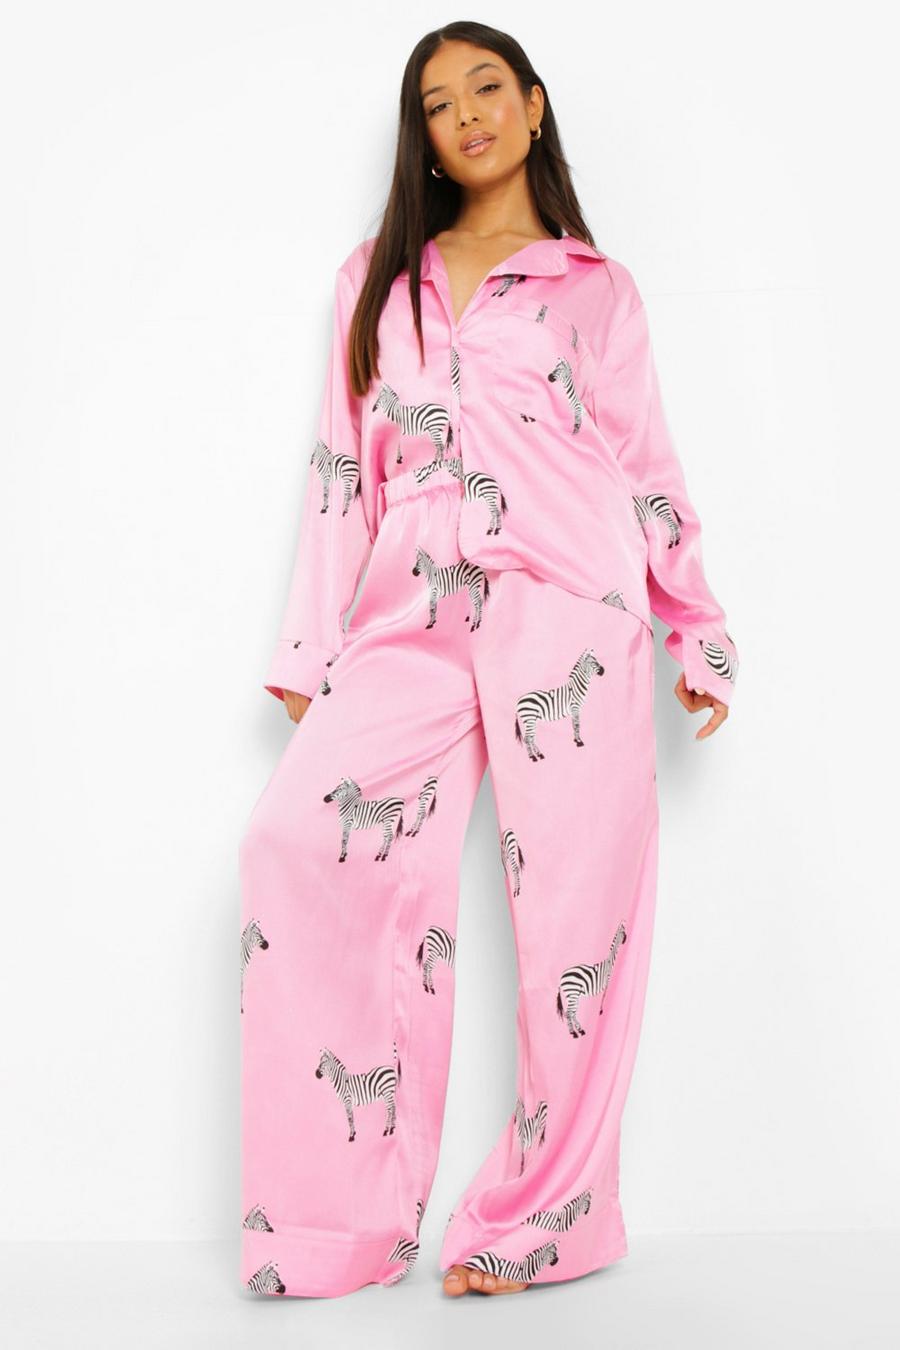 Petite - Ensemble de pyjama à zébrures, Hot pink